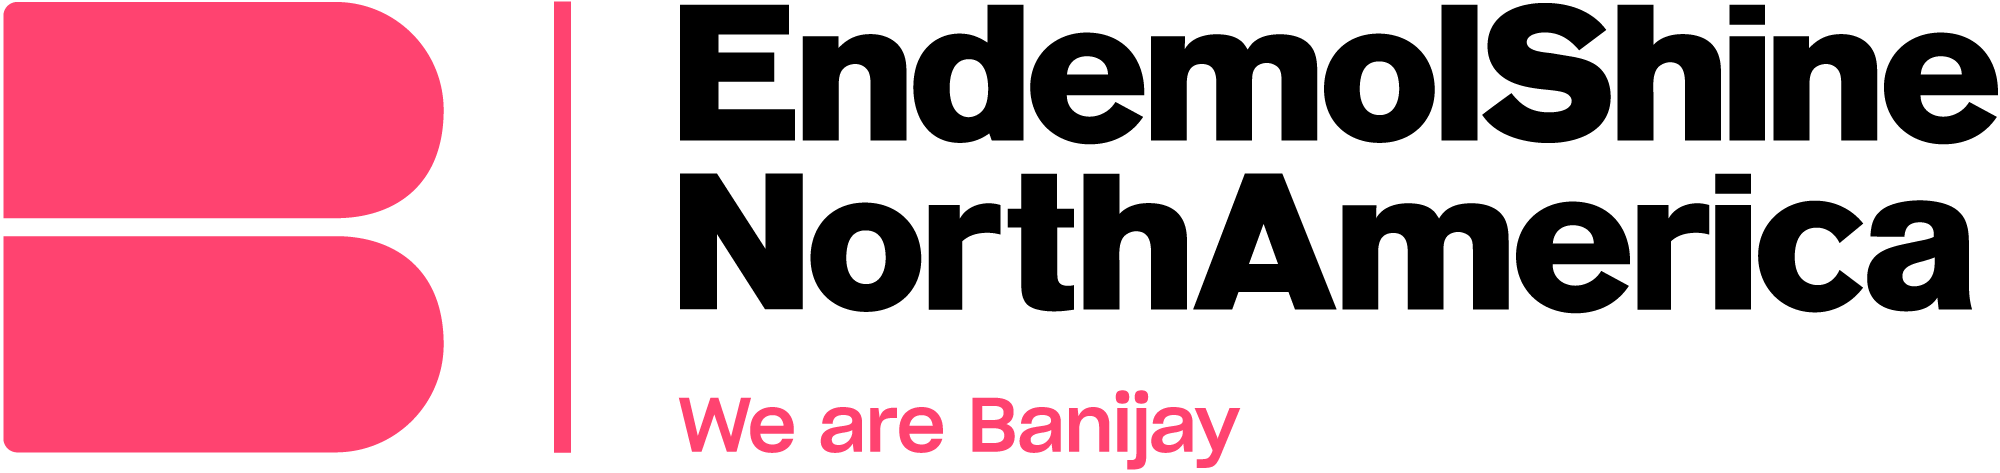 Endemol Shine Banijay